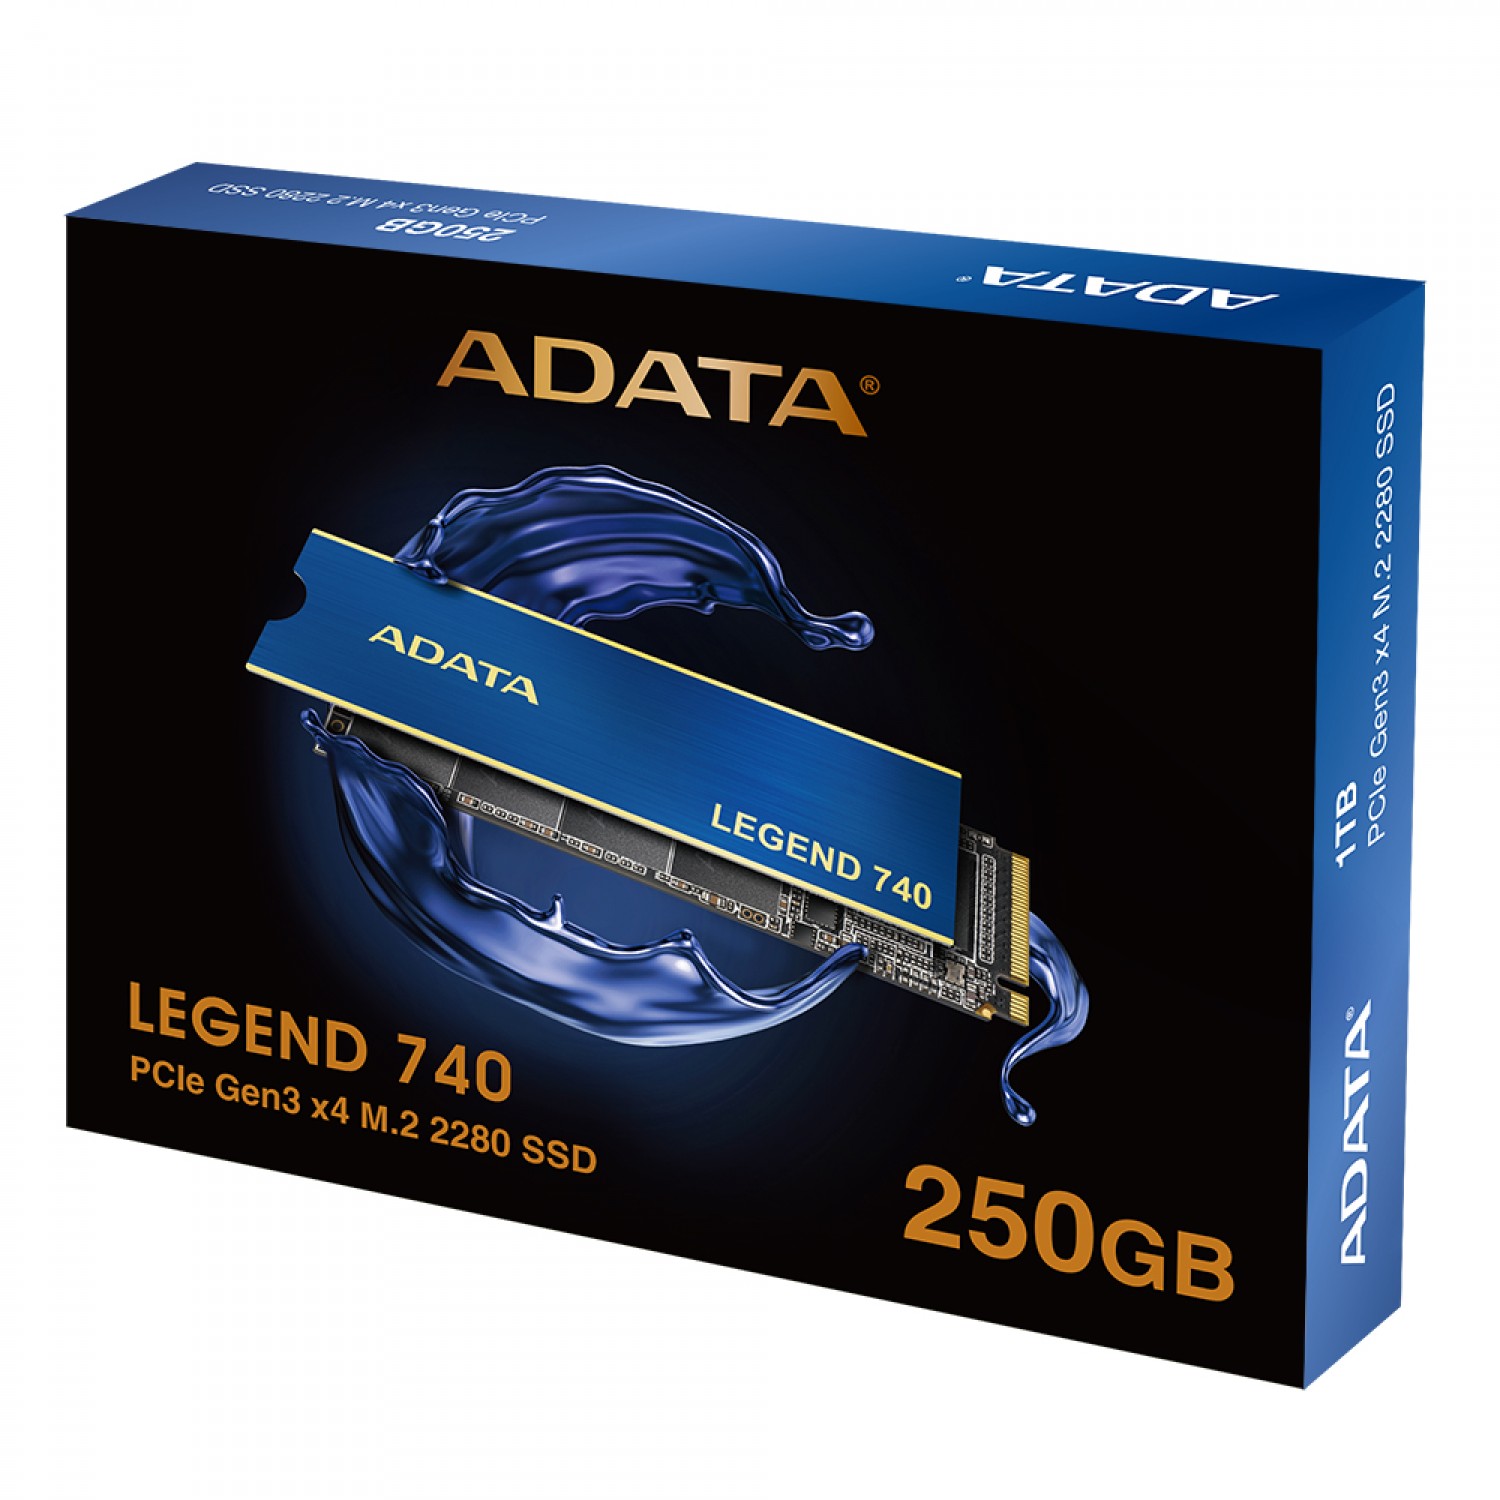 حافظه اس اس دی ADATA Legend 740 250GB-6